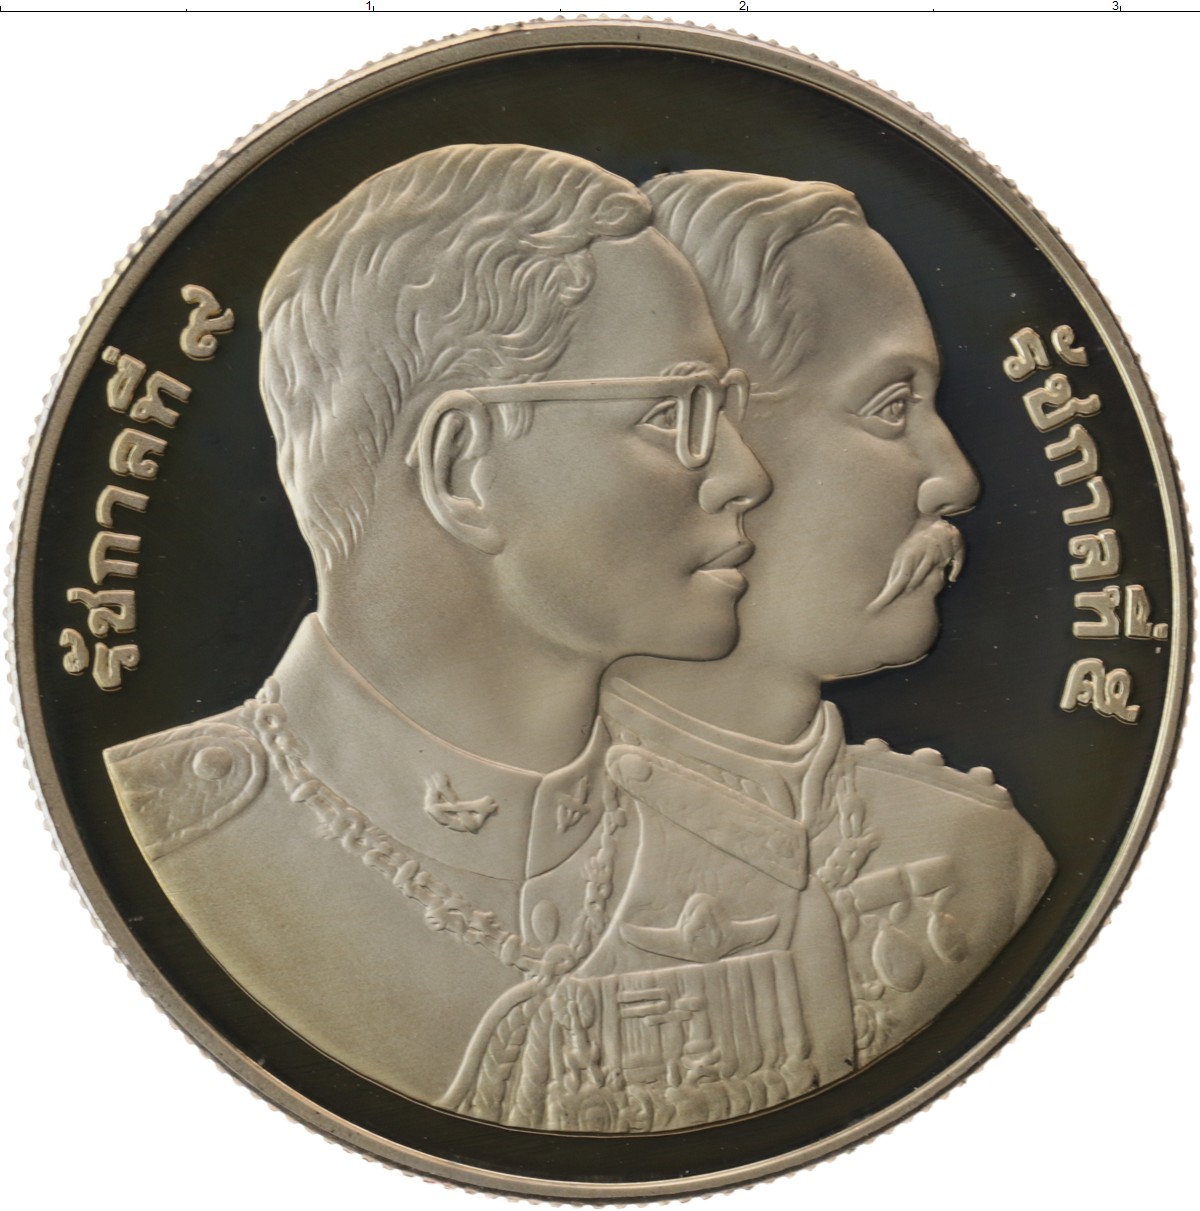 600 бат. Таиланд монета 1000000 бат. Год на монетах Таиланда. Монеты королевской семьи женского пола 20 бат Таиланд. Монета Тайланд 1 бат 1993.